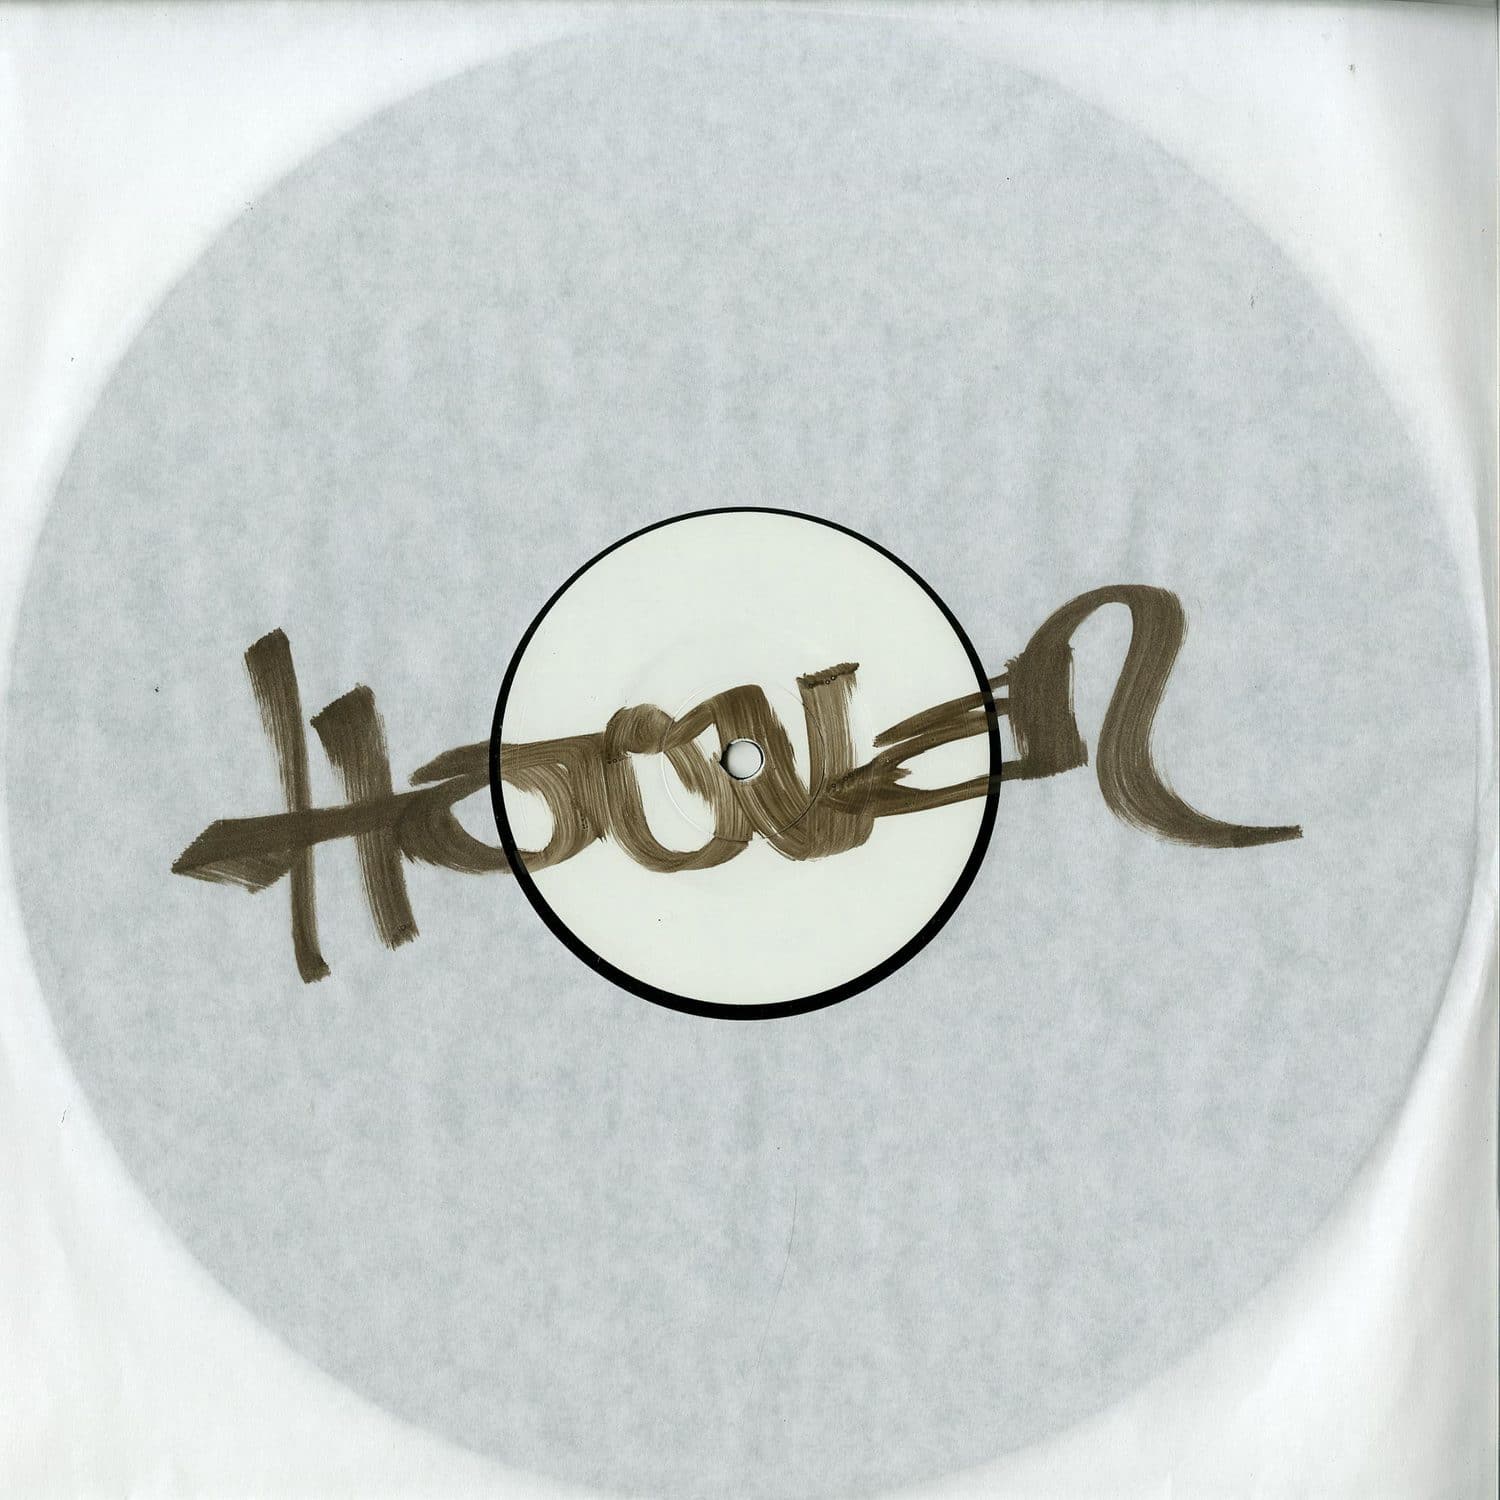 Hoover1 - HOOVER1